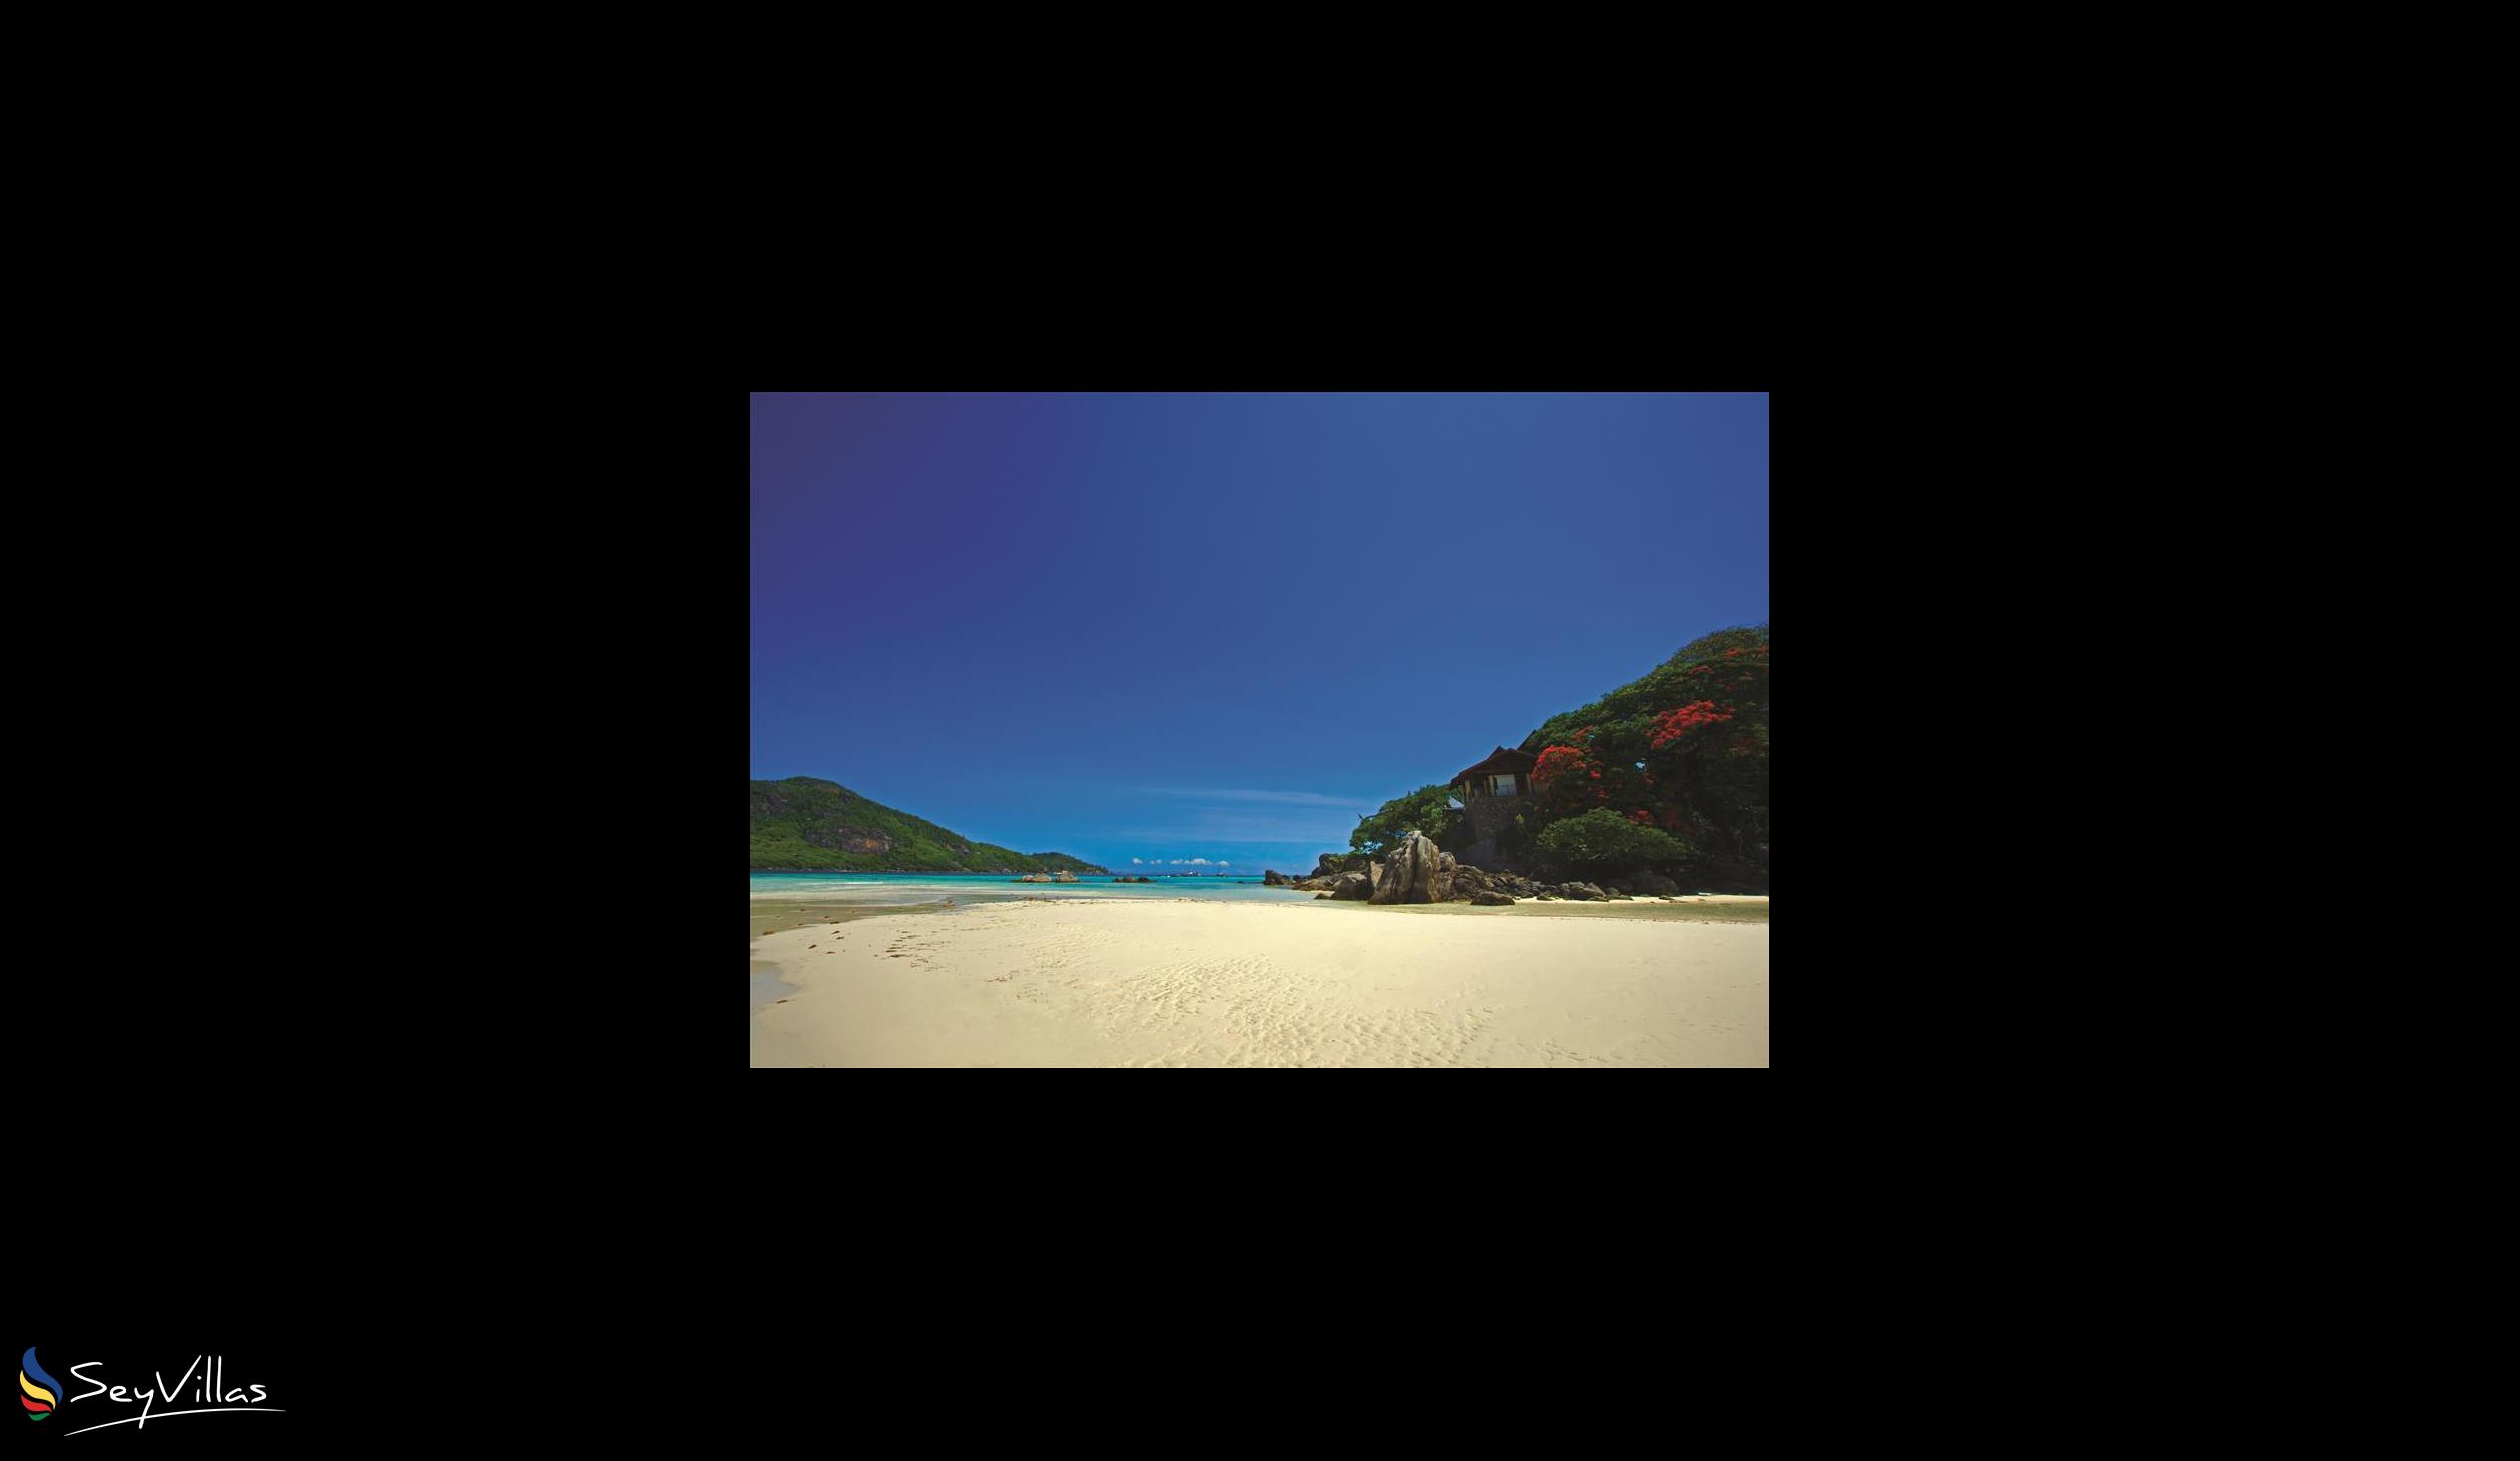 Photo 55: JA Enchanted Island Resort - Beaches - Round Island (Seychelles)